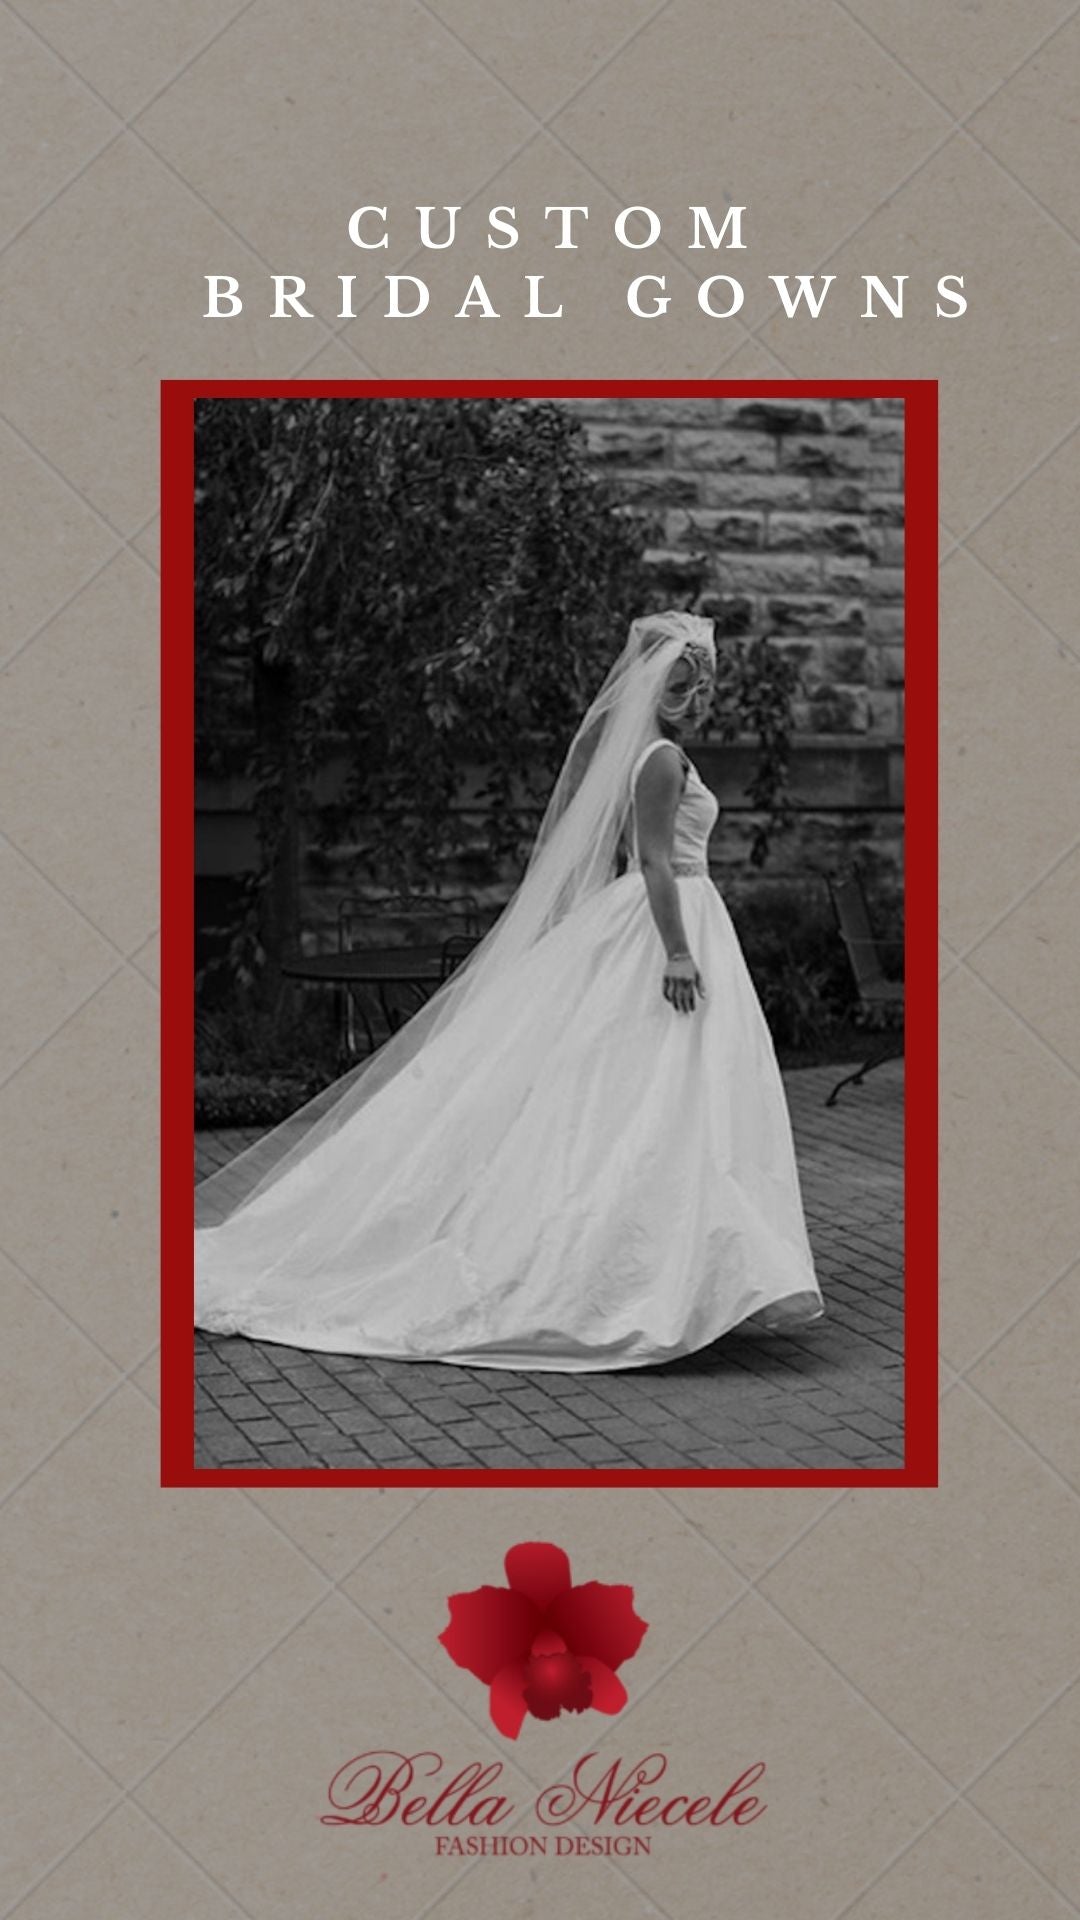 Introducing Custom Bridal Gowns